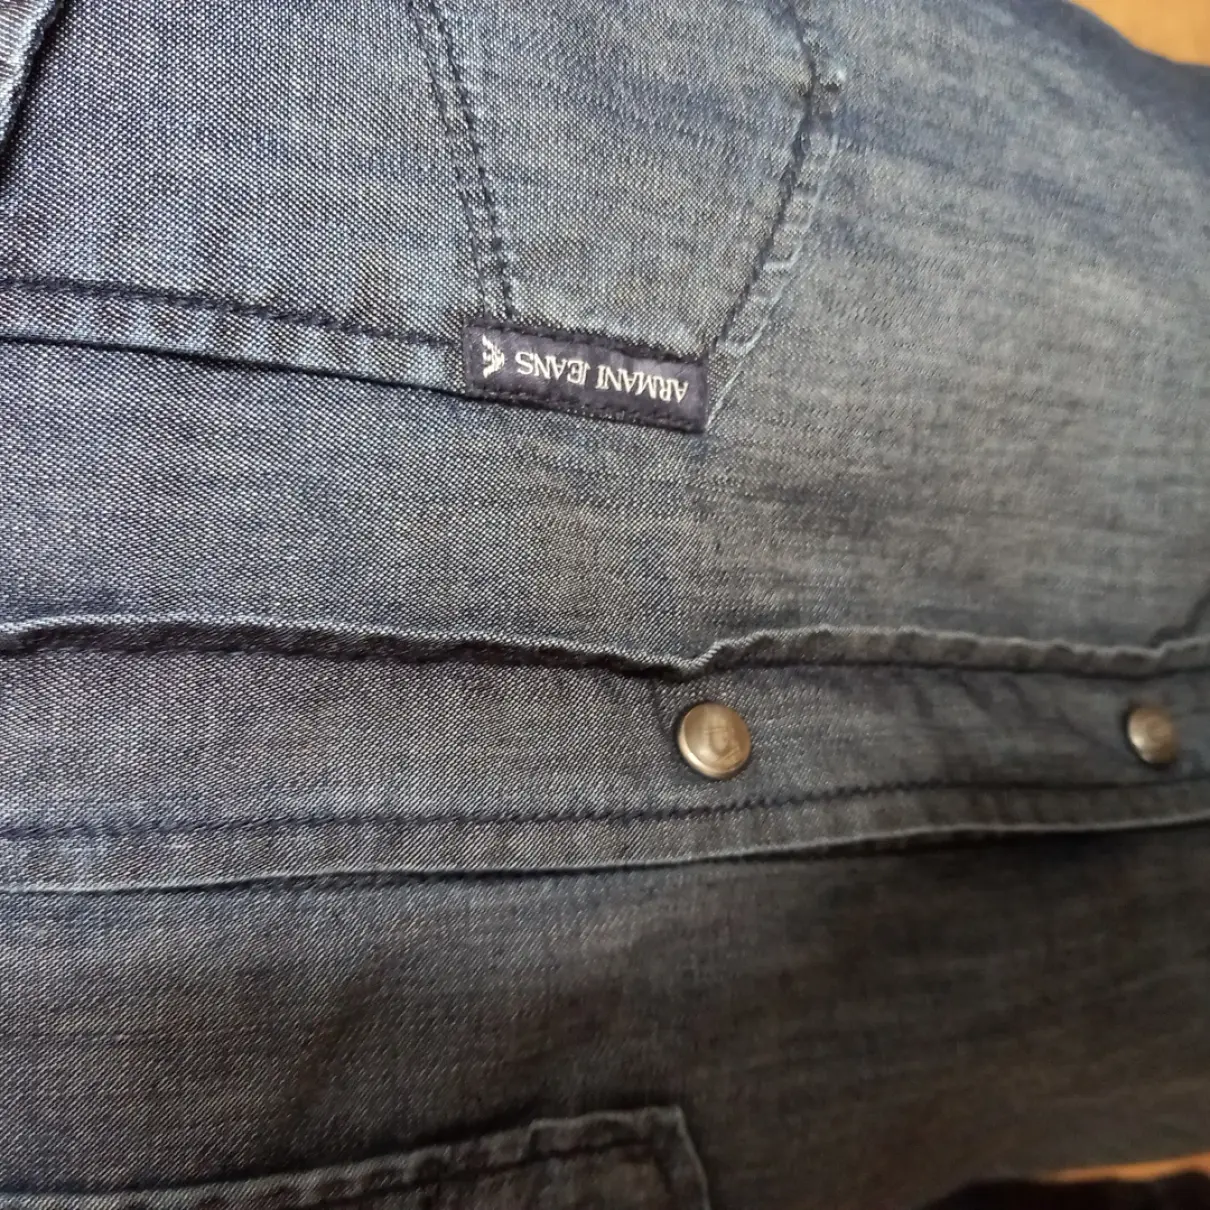 Shirt Armani Jeans